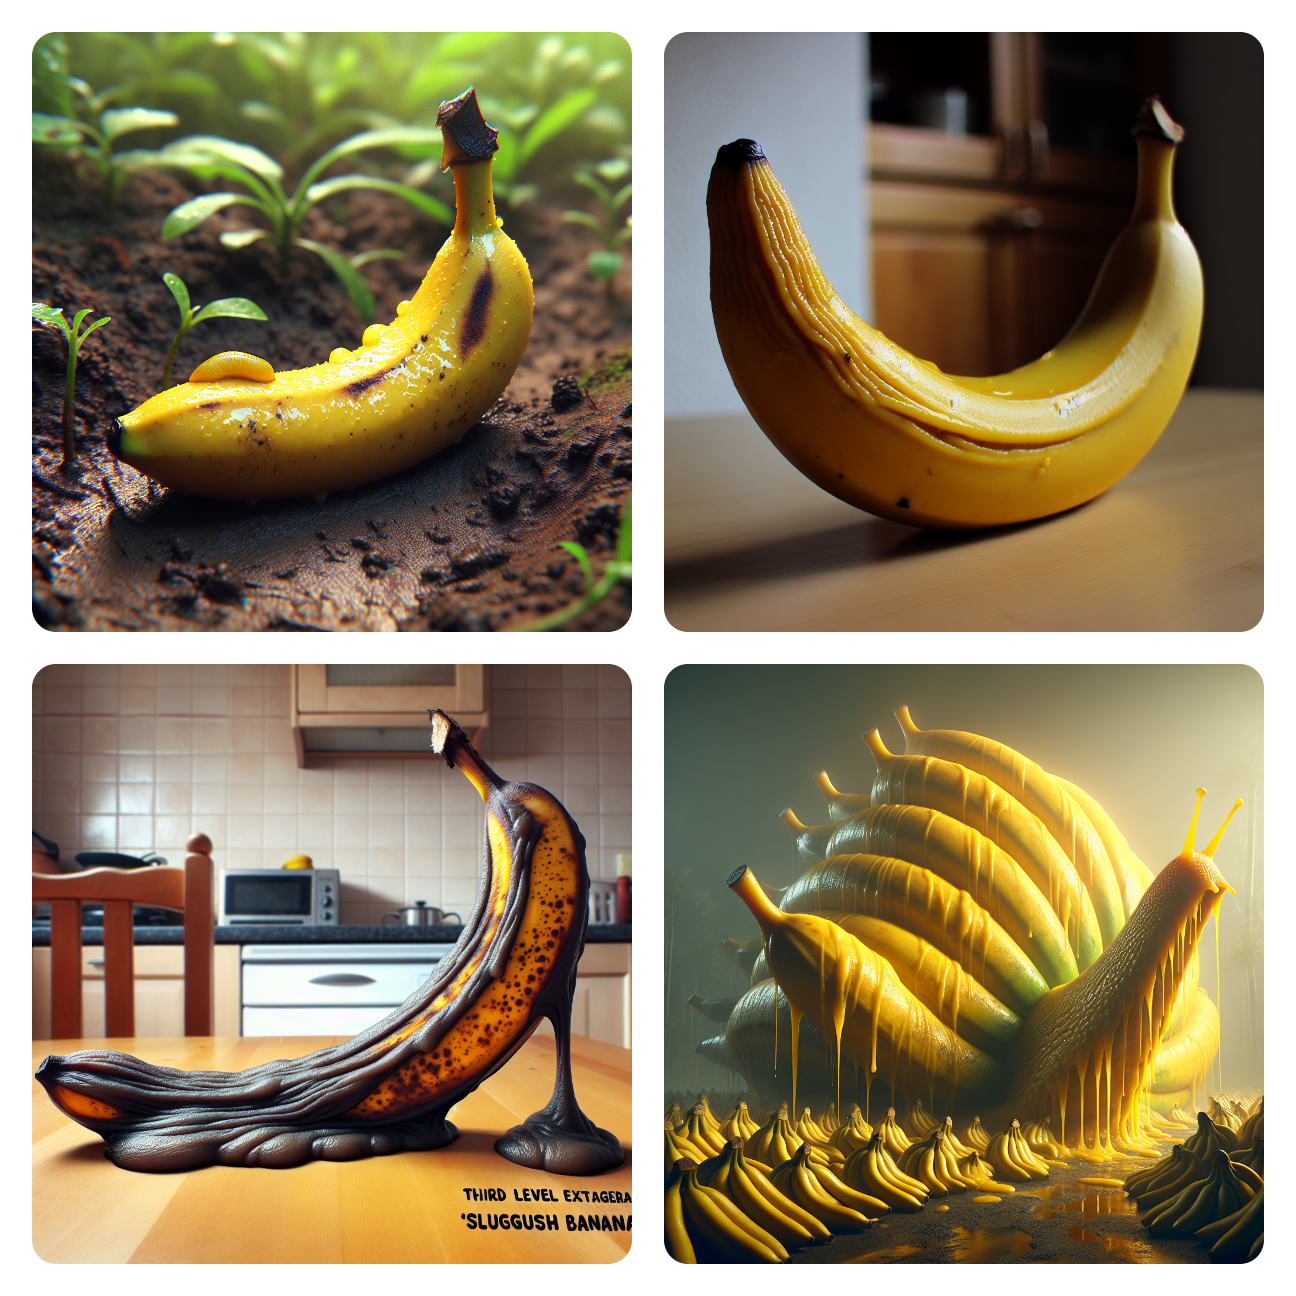 Image: Gone Bananas: The Sluggish Saga